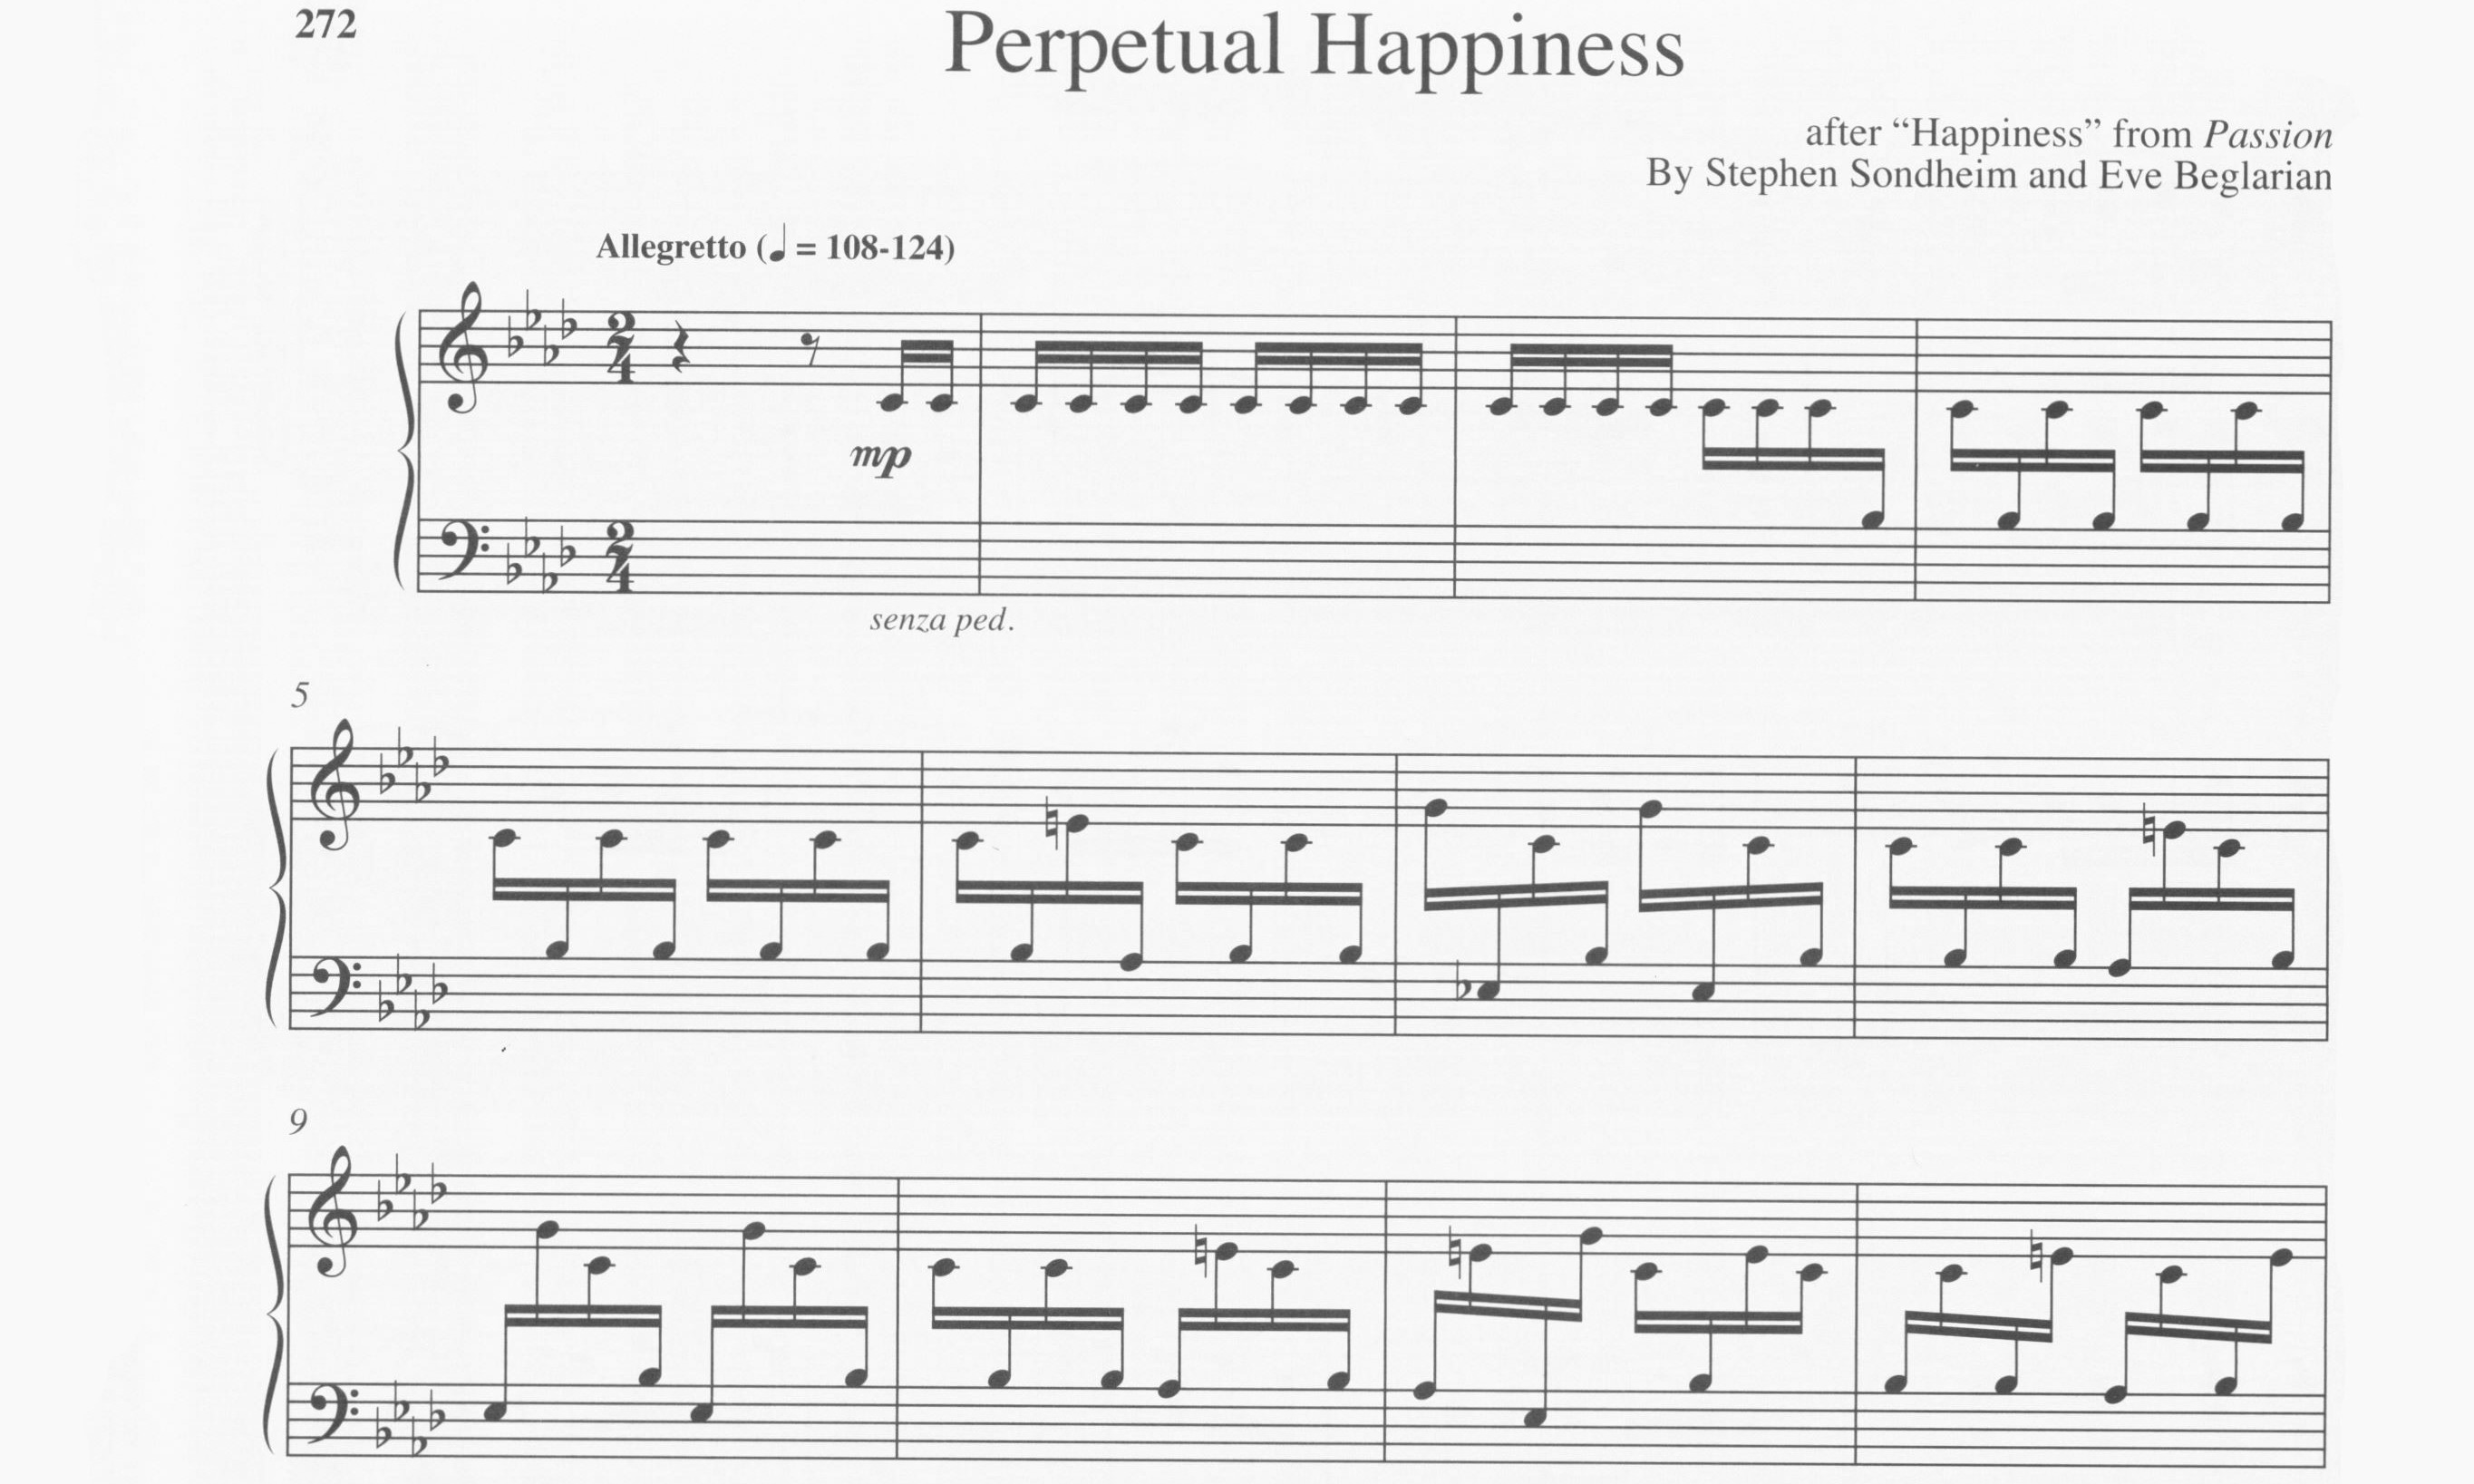 Beglarian, Eve - Perpetual Happiness